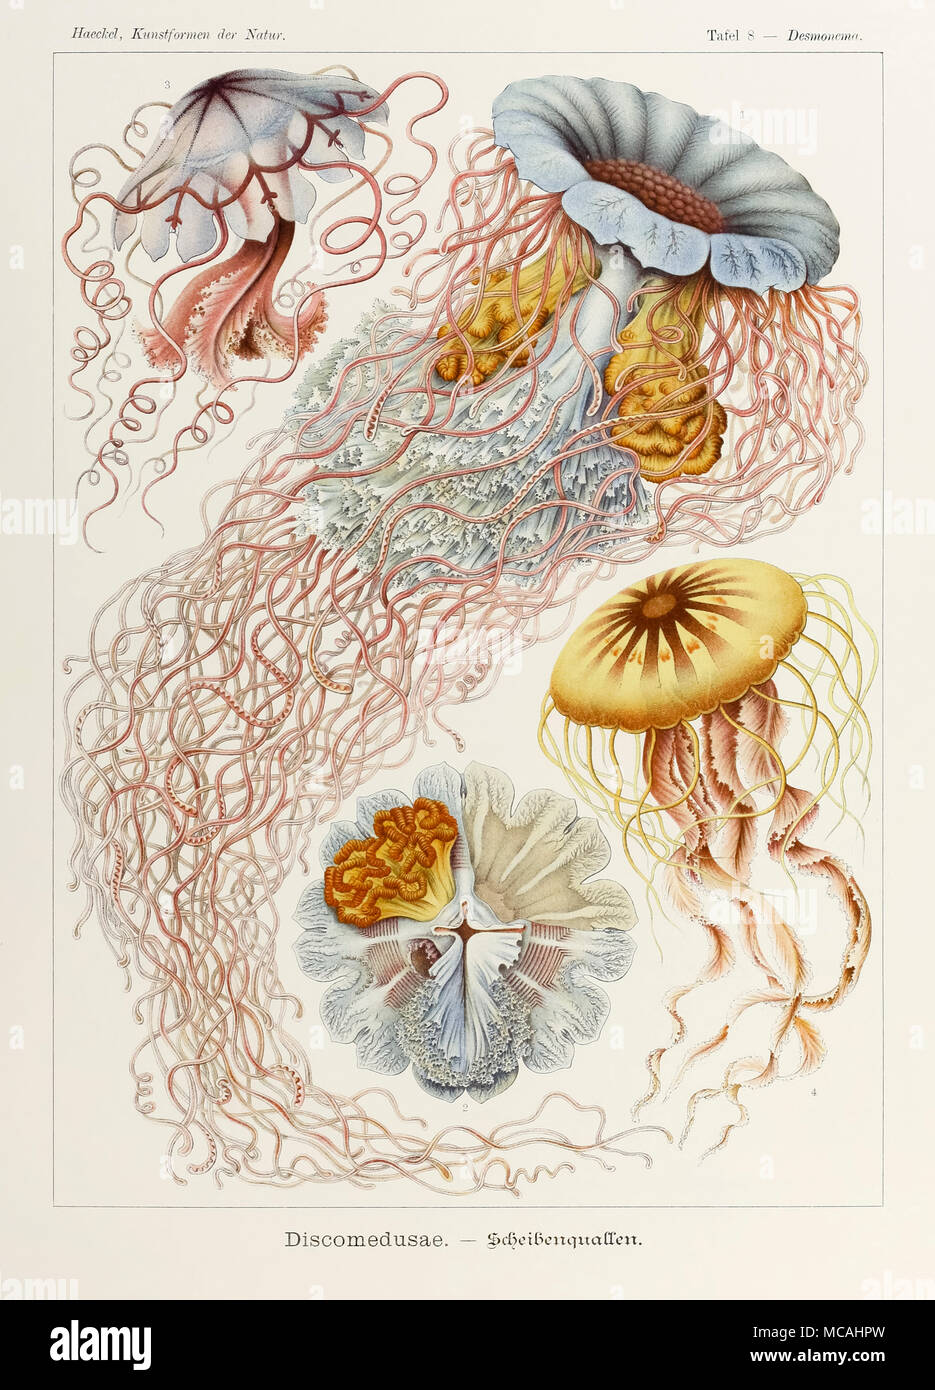 Plate 8 Desmonema Discomedusae from ‘Kunstformen der Natur’ (Art Forms in Nature) illustrated by Ernst Haeckel (1834-1919). See more information below. Stock Photo